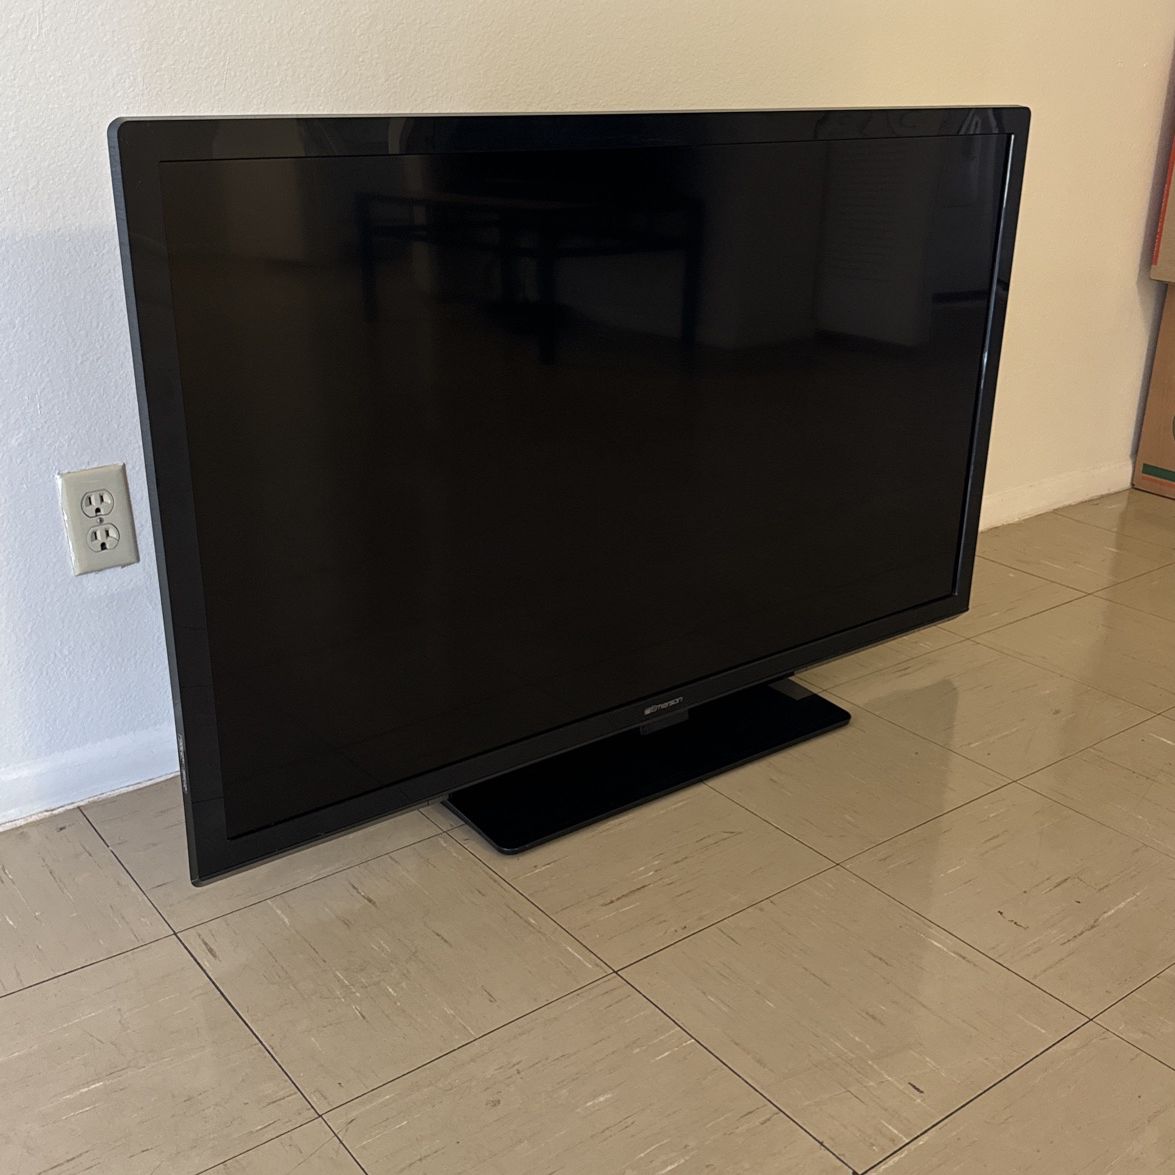 $100 OBO 50” Flatscreen TV